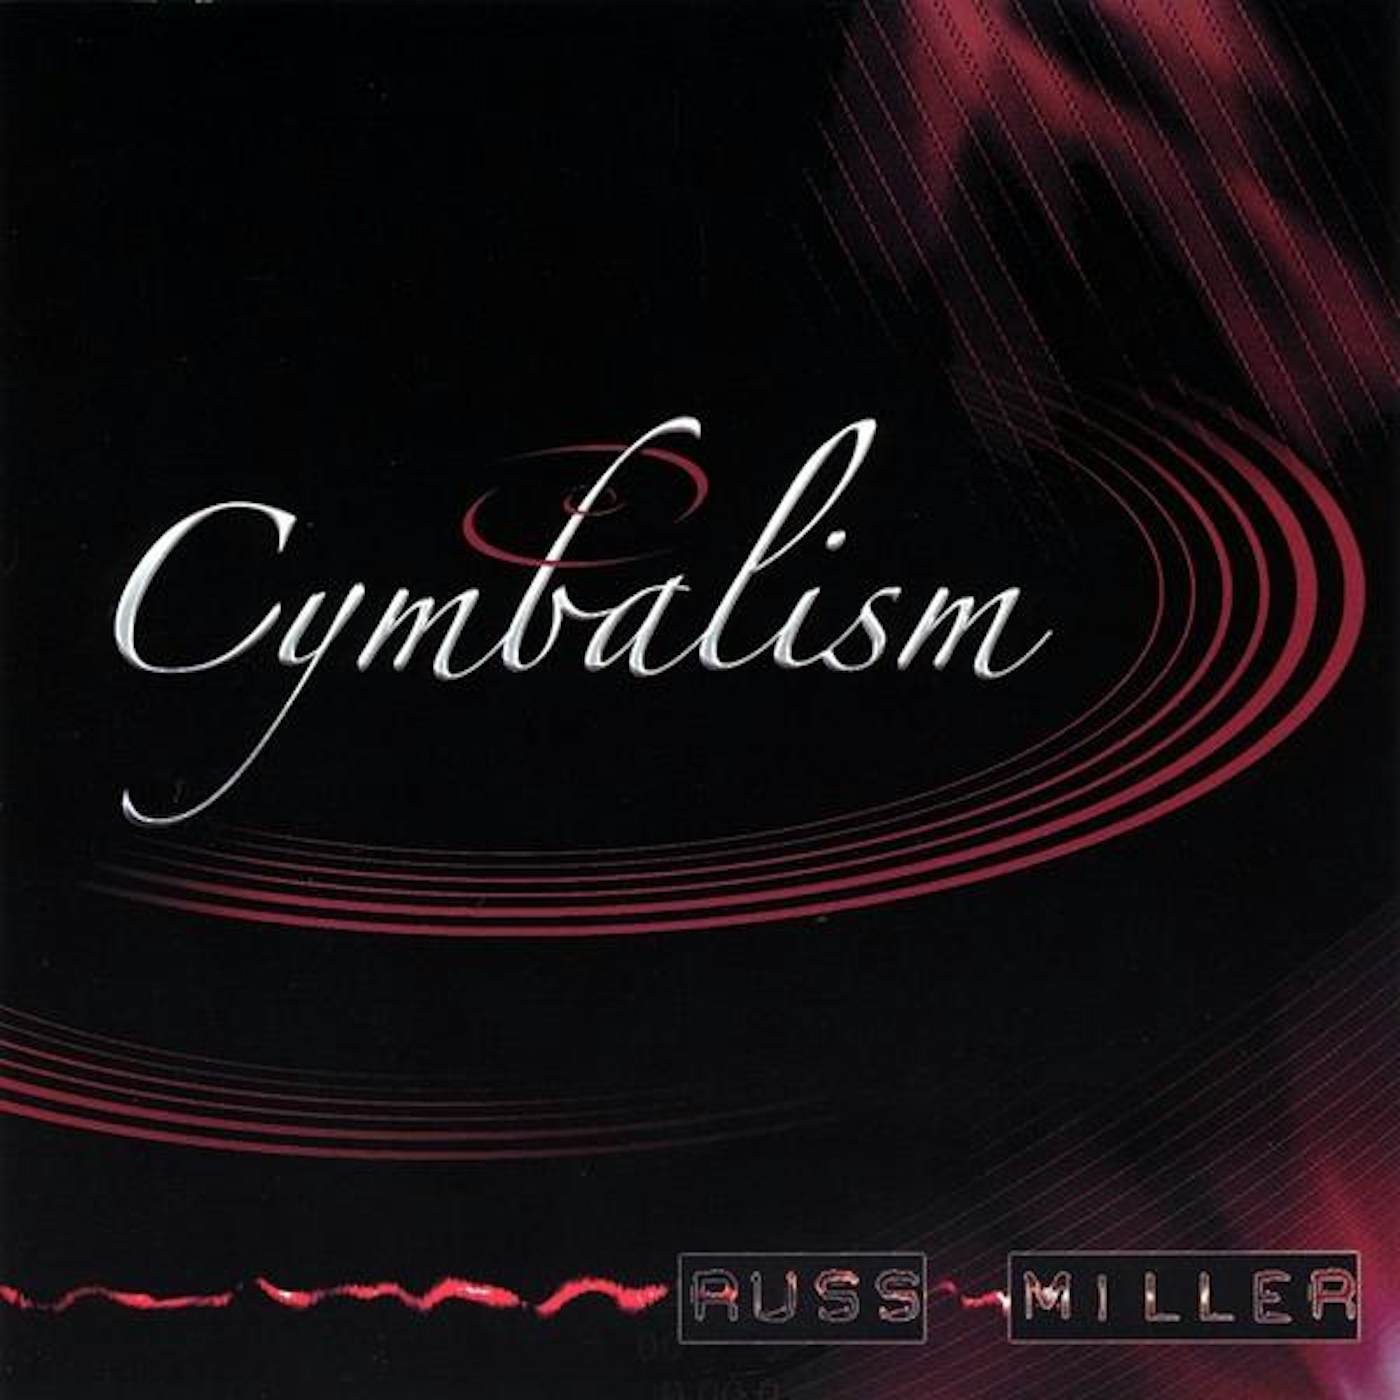 Russ Miller CYMBALISM CD